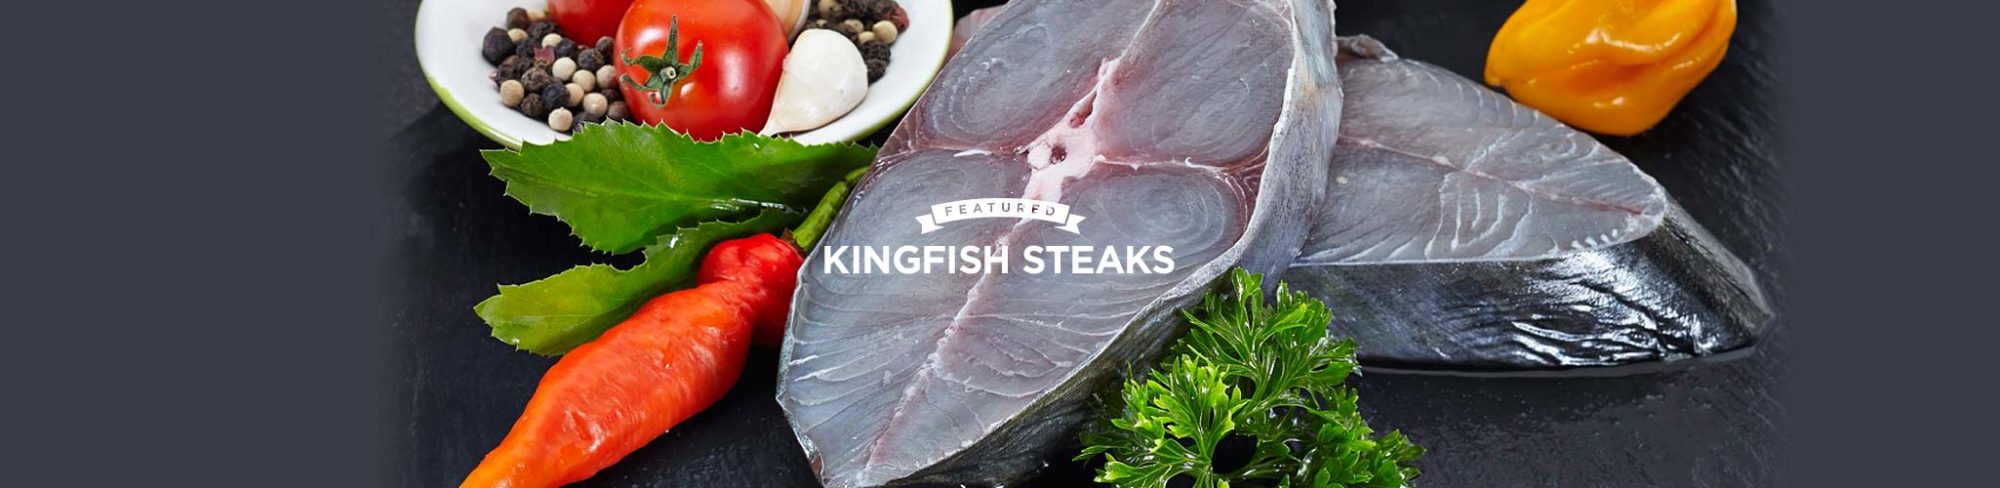 Kingfish Steaks